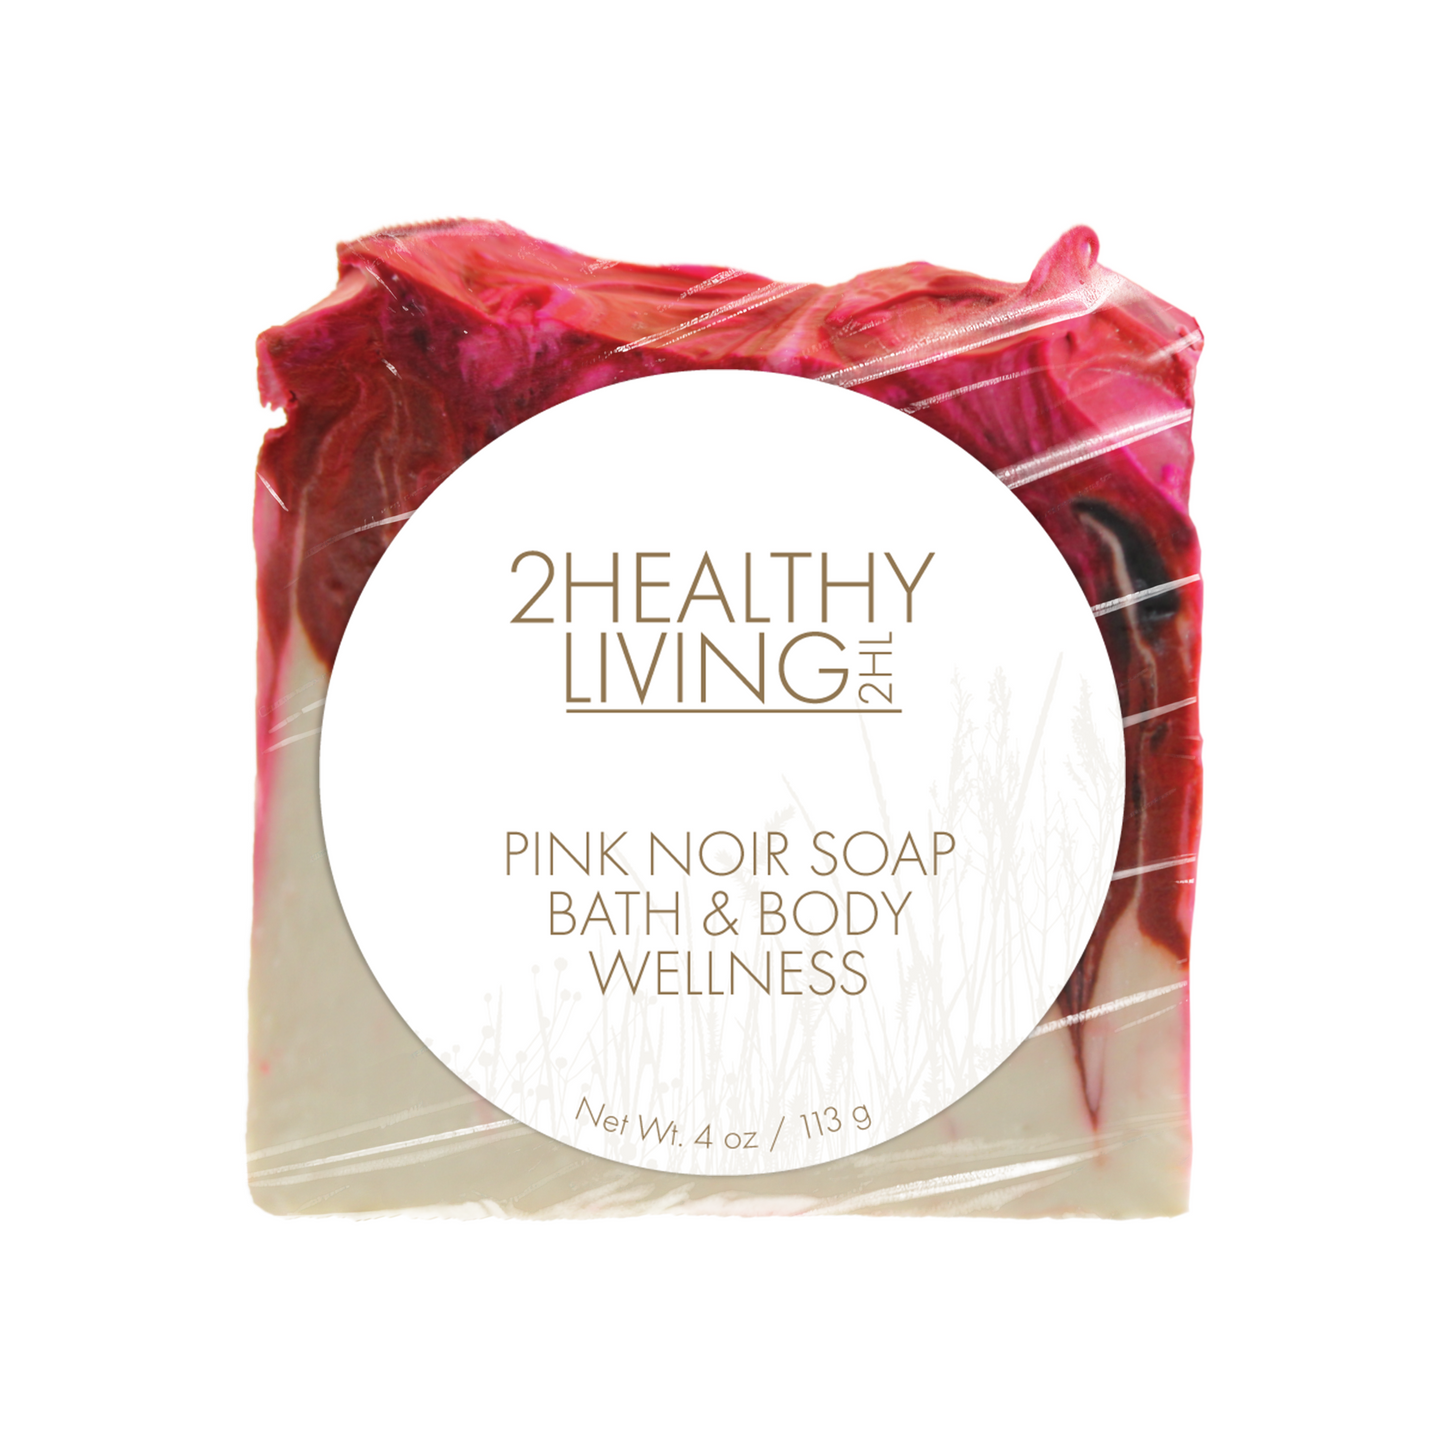 Pink Noir Soap Bath & Body Wellness